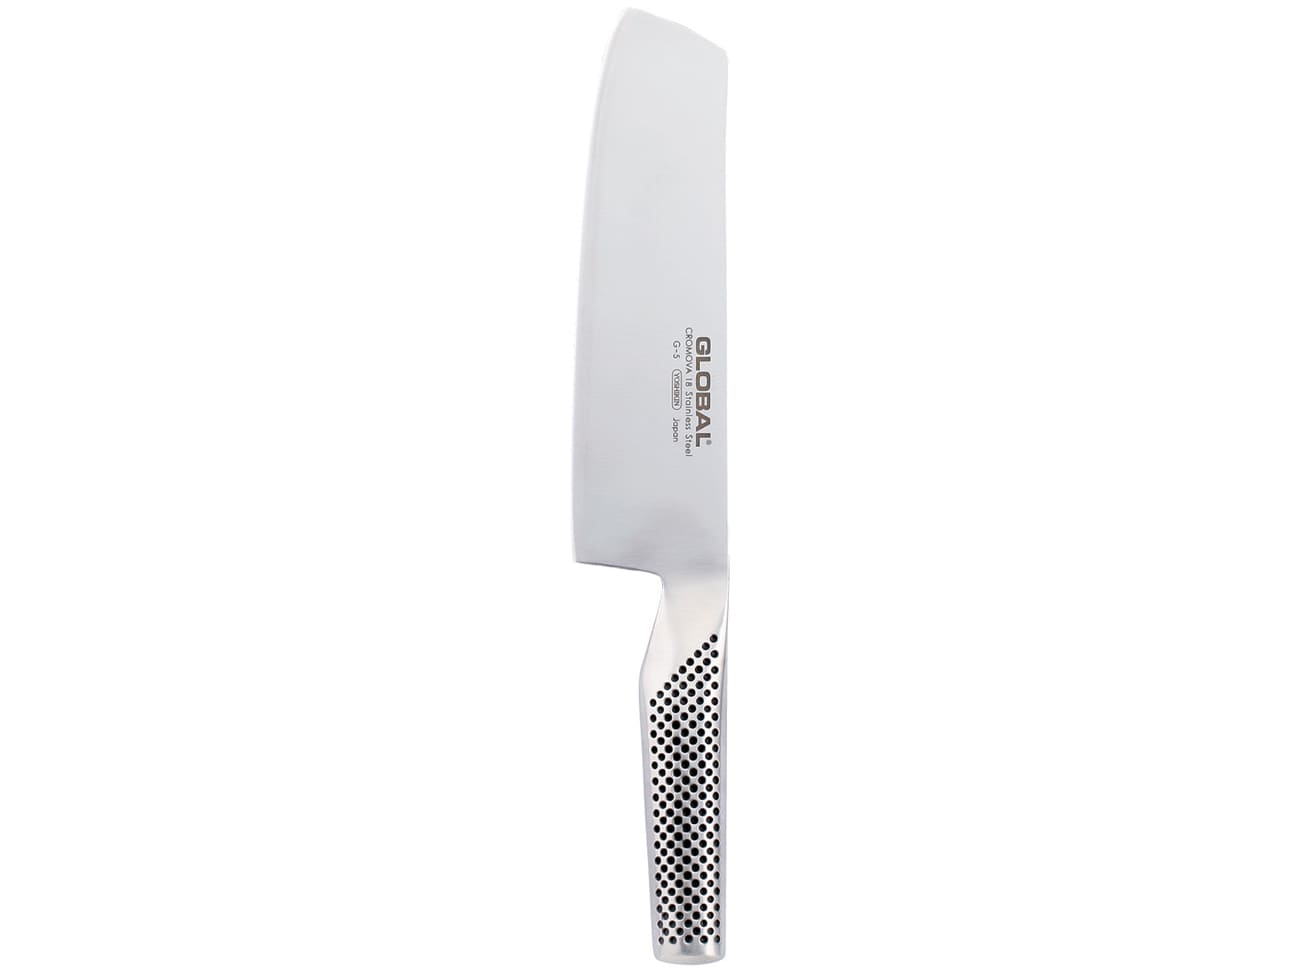 Global knives - G5 - Vegetable Knife - 18cm - kitchen knife